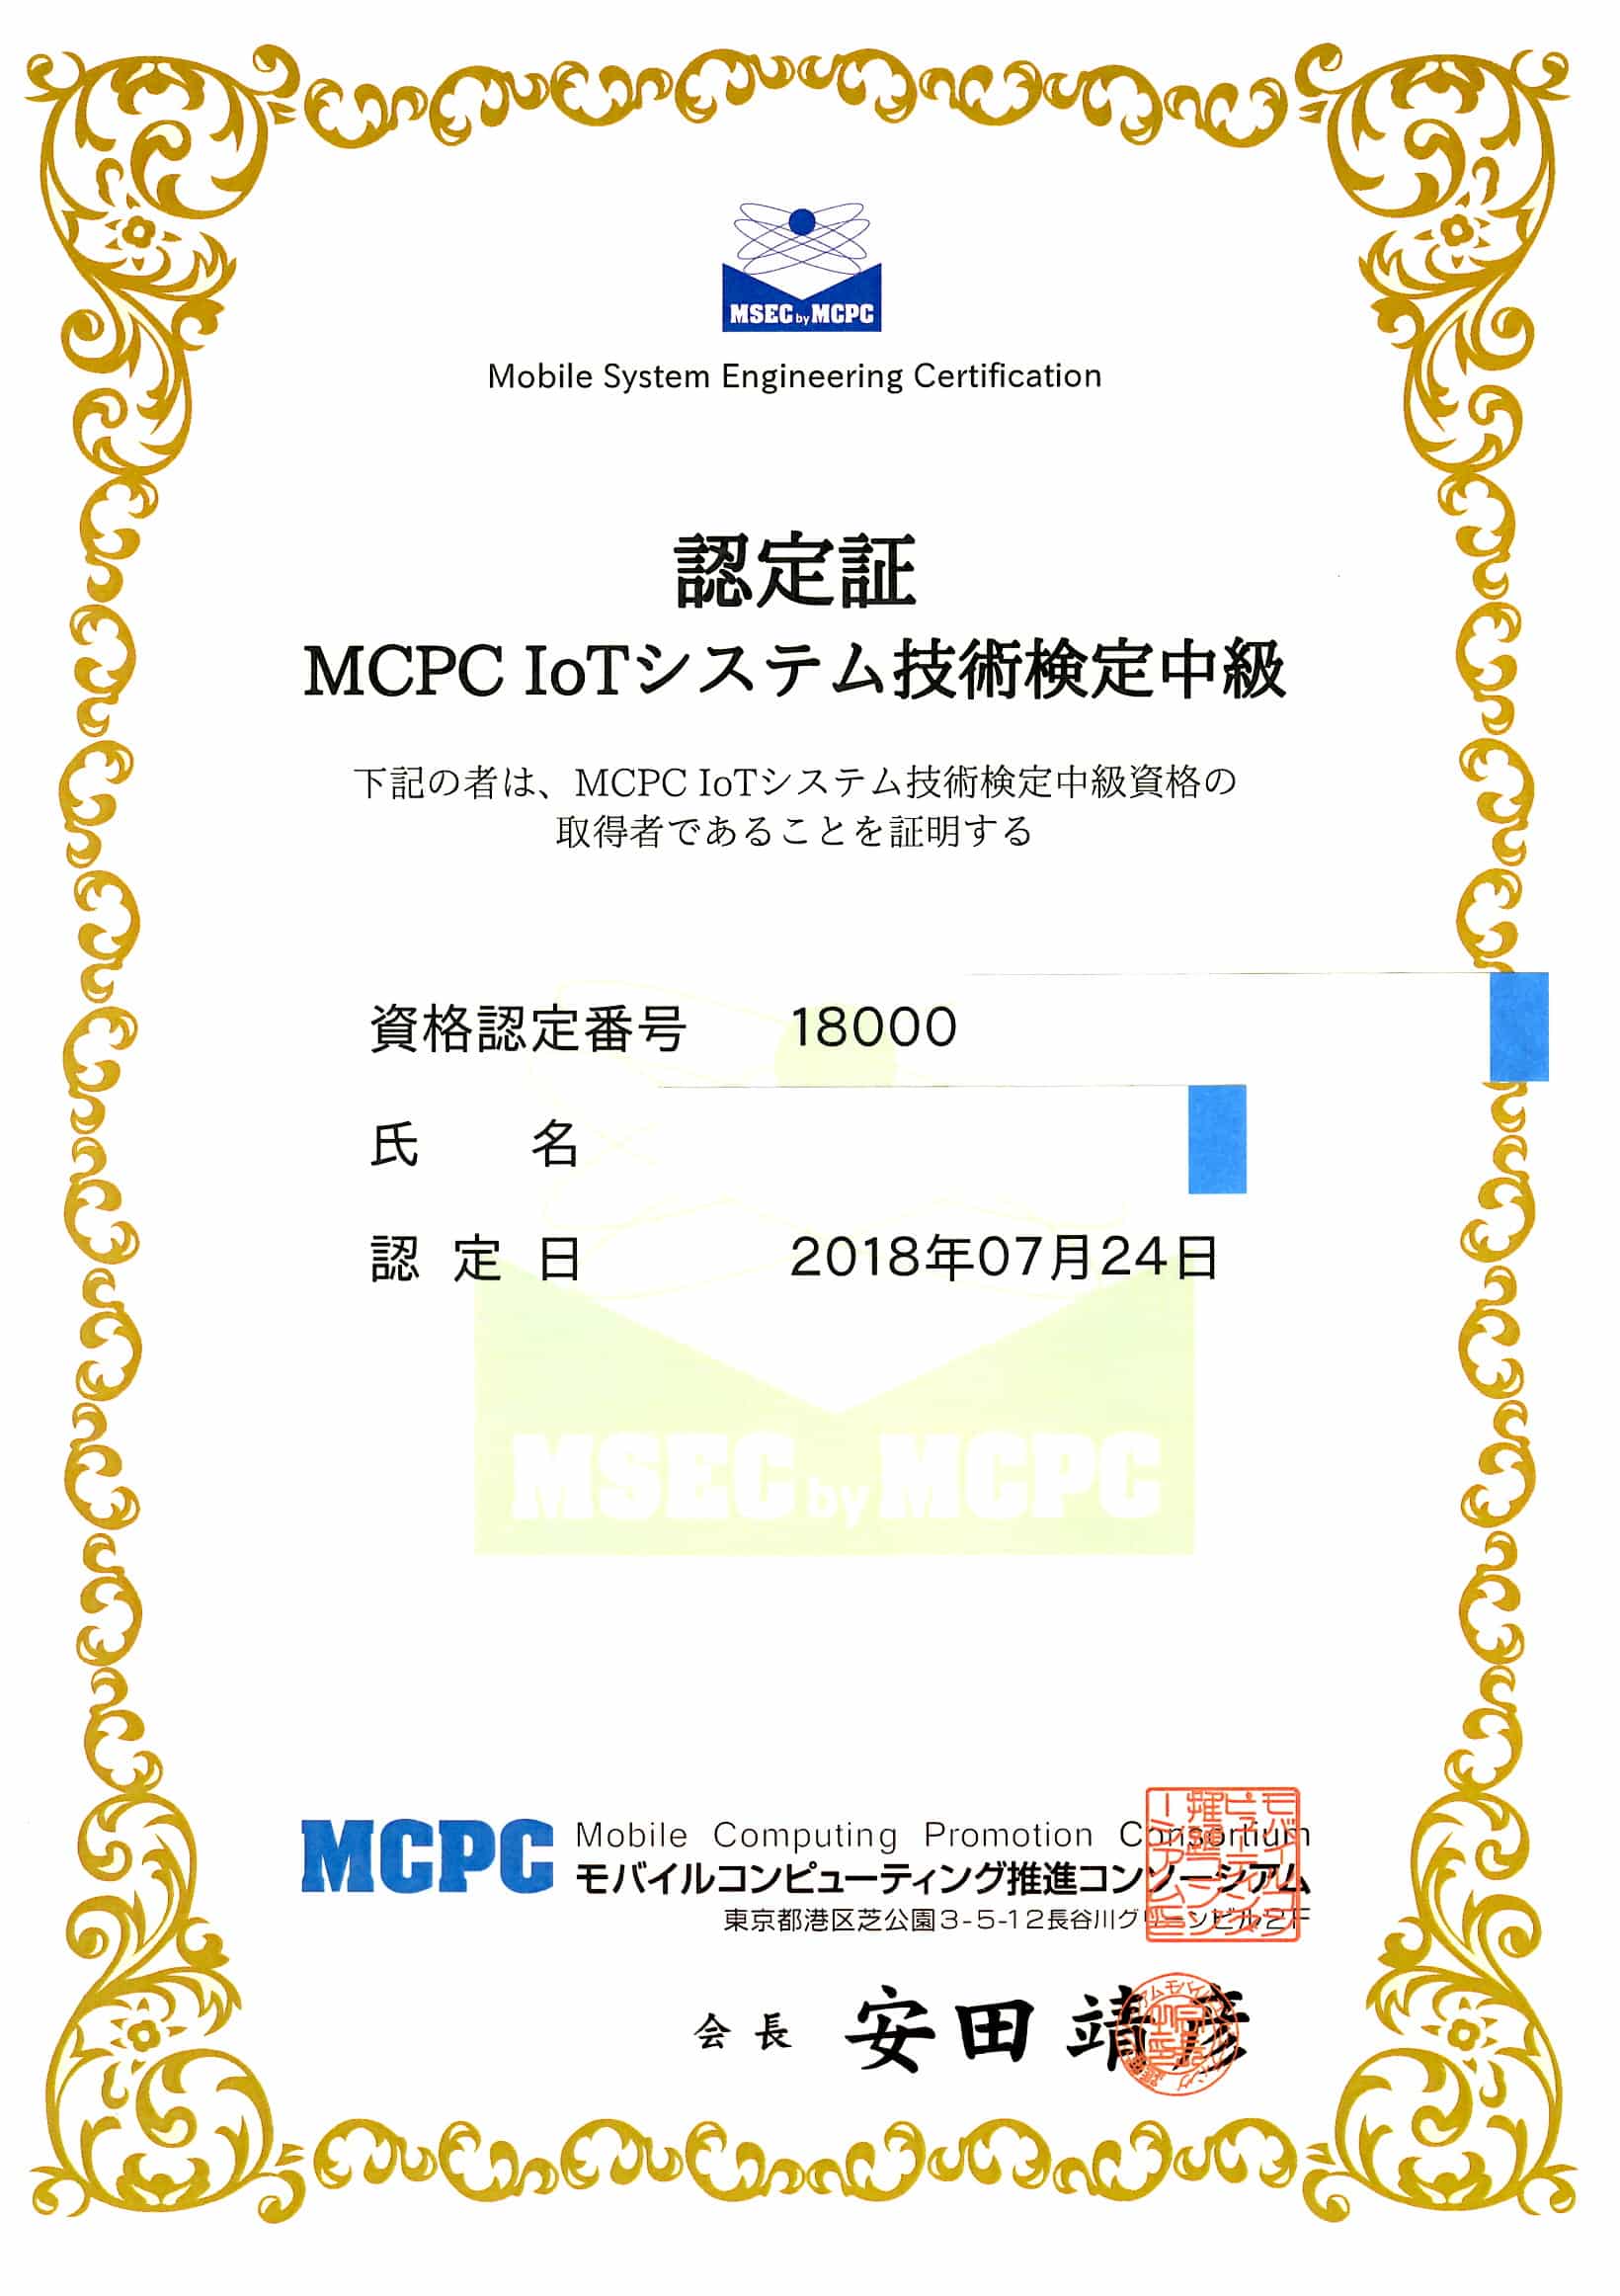 MCPC IoT認定証